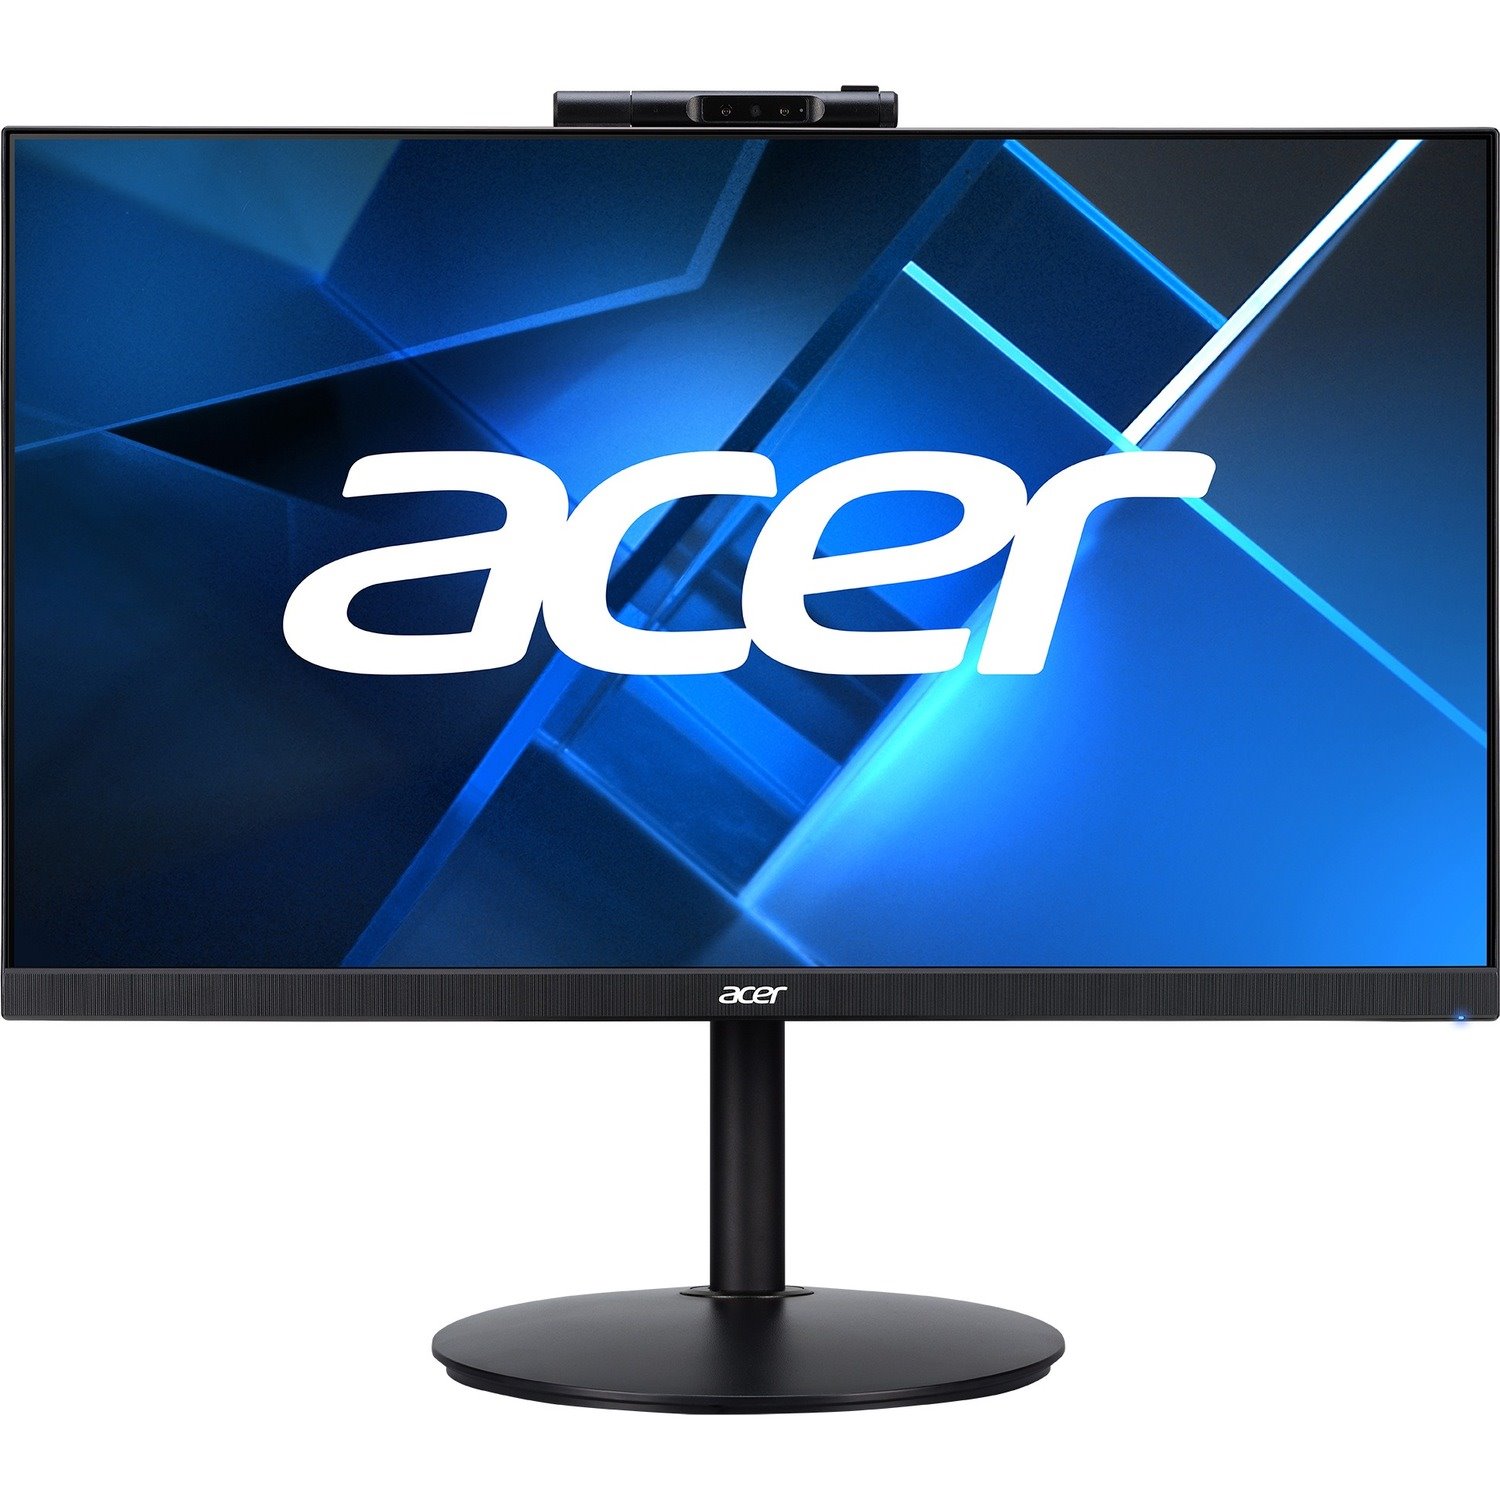 Acer CB242Y D 23.8" Webcam Full HD LED LCD Monitor - 16:9 - Black